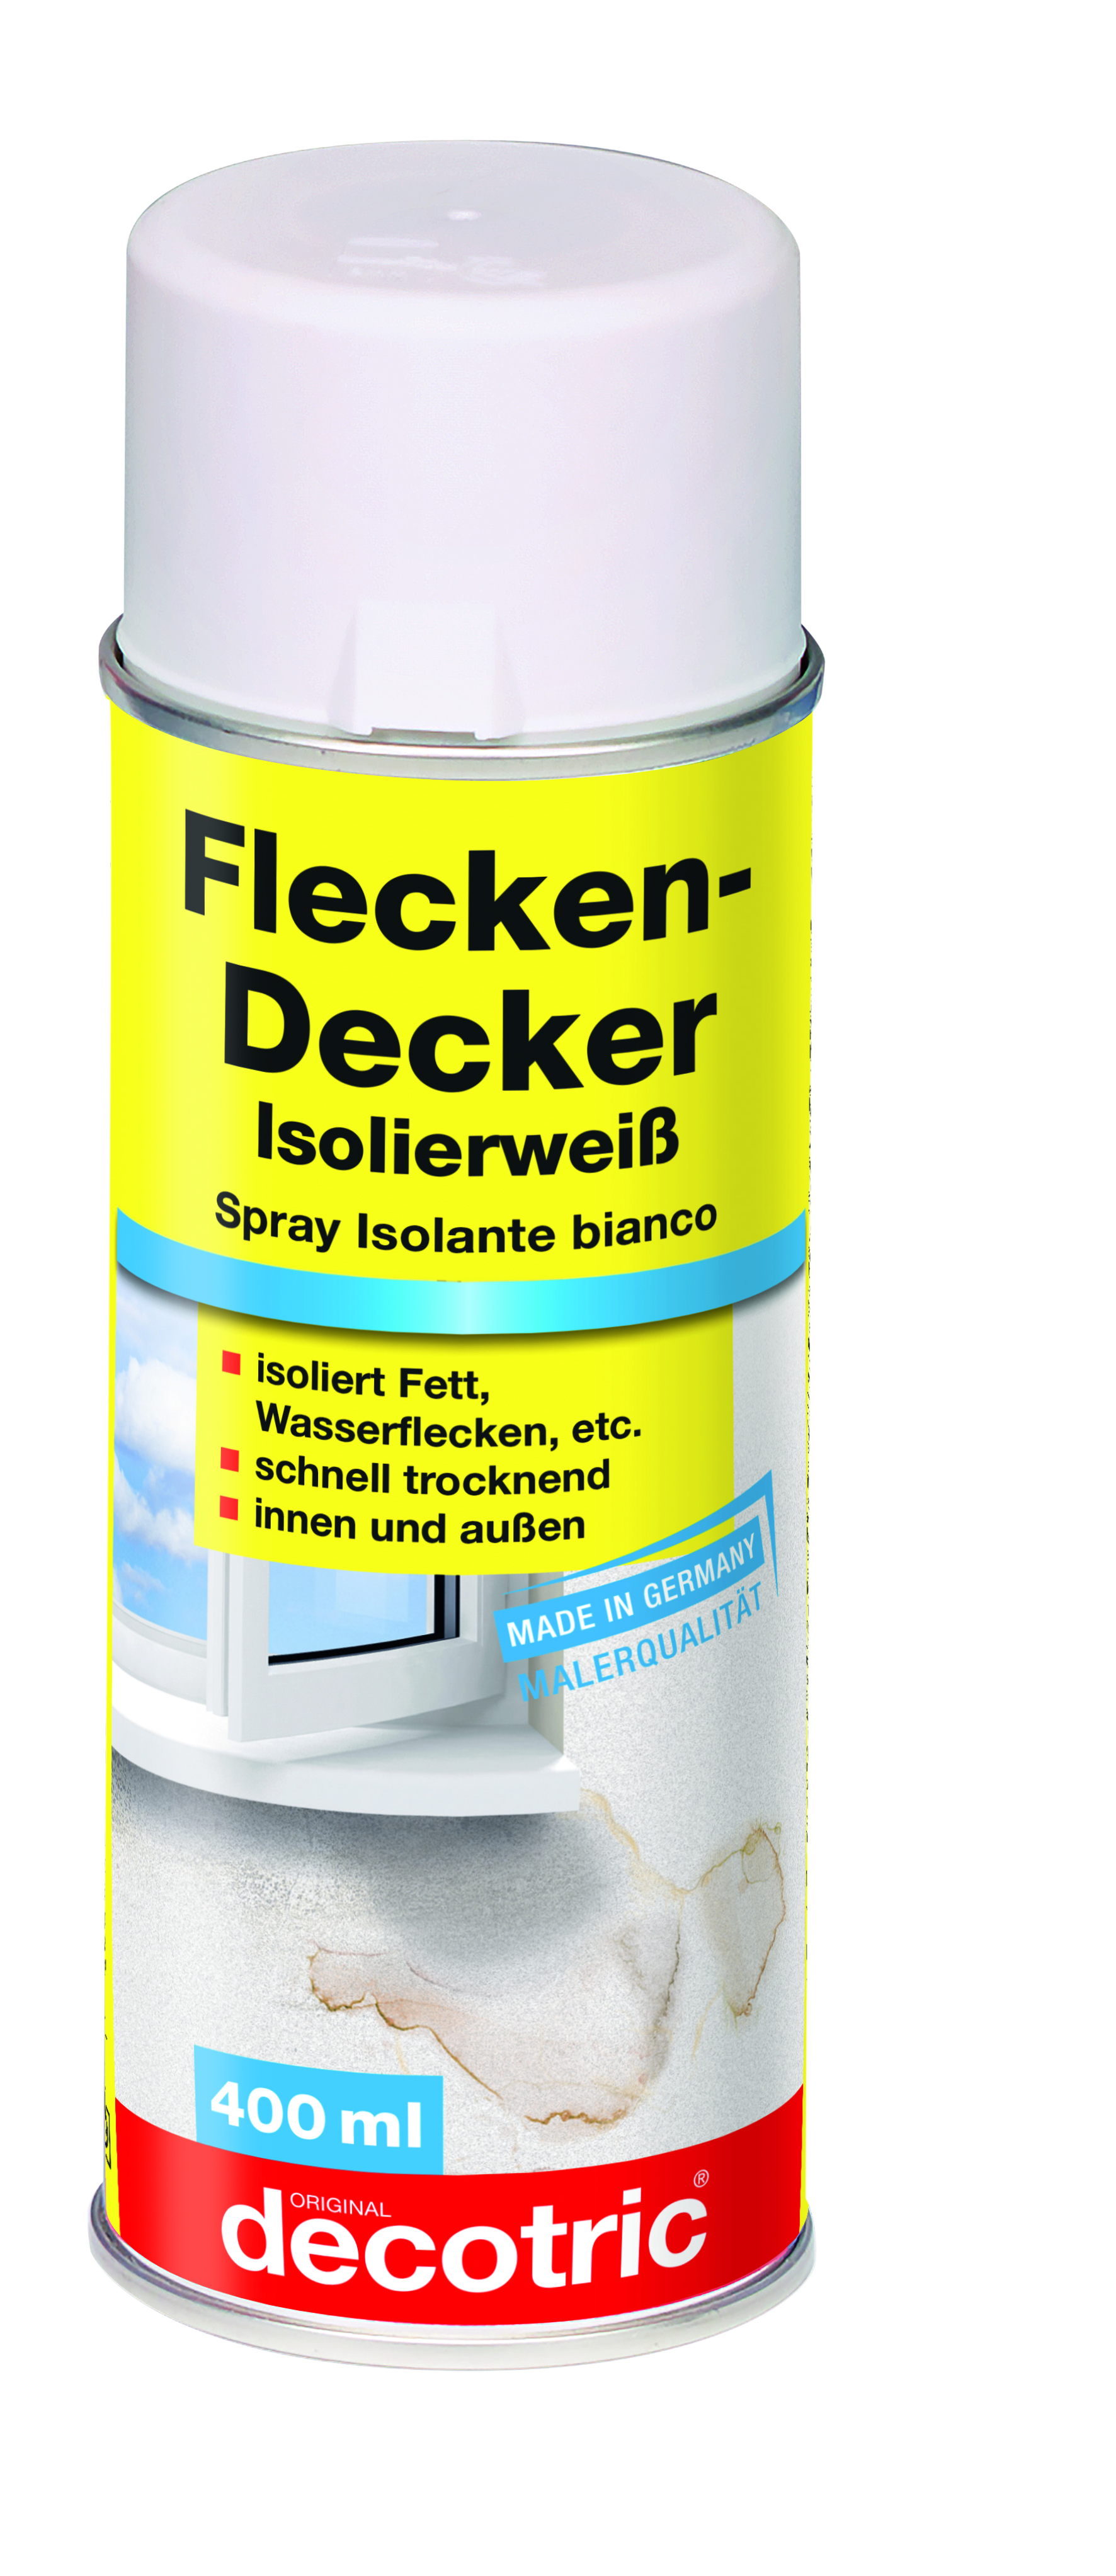 DECOTRIC Flecken-Decker 400ml decotric